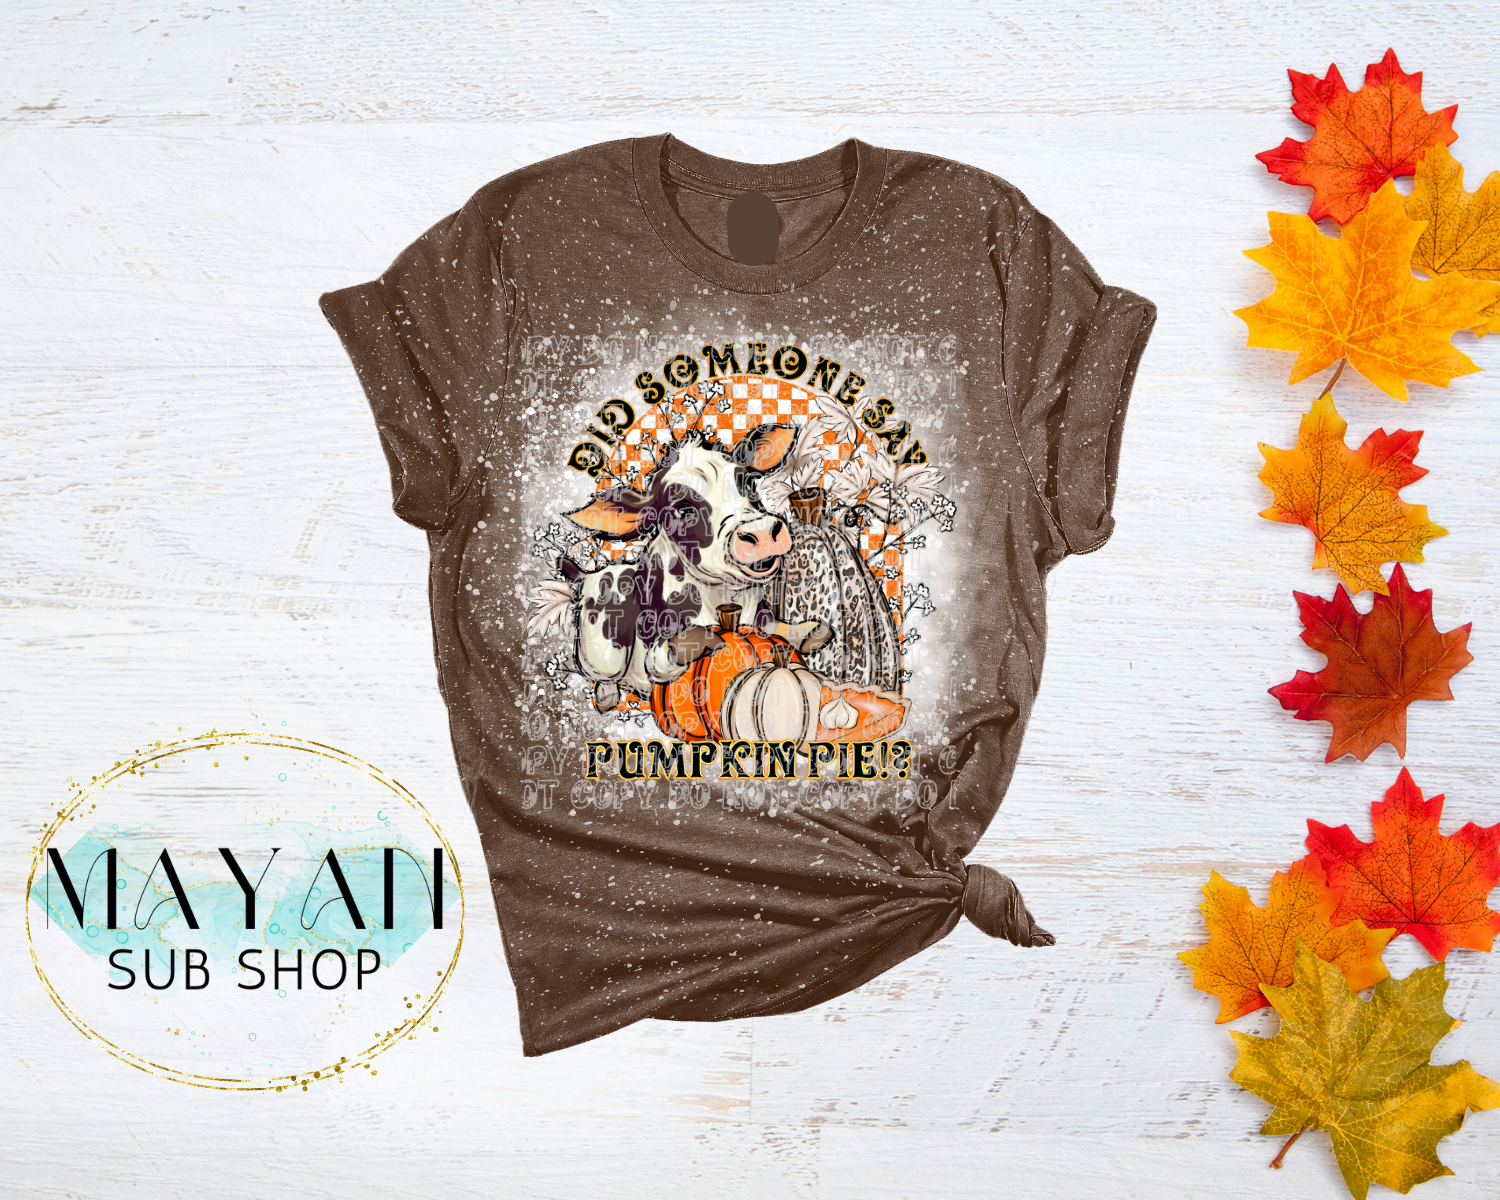 Pumpkin pie in heather brown bleached shirt. -Mayan Sub Shop